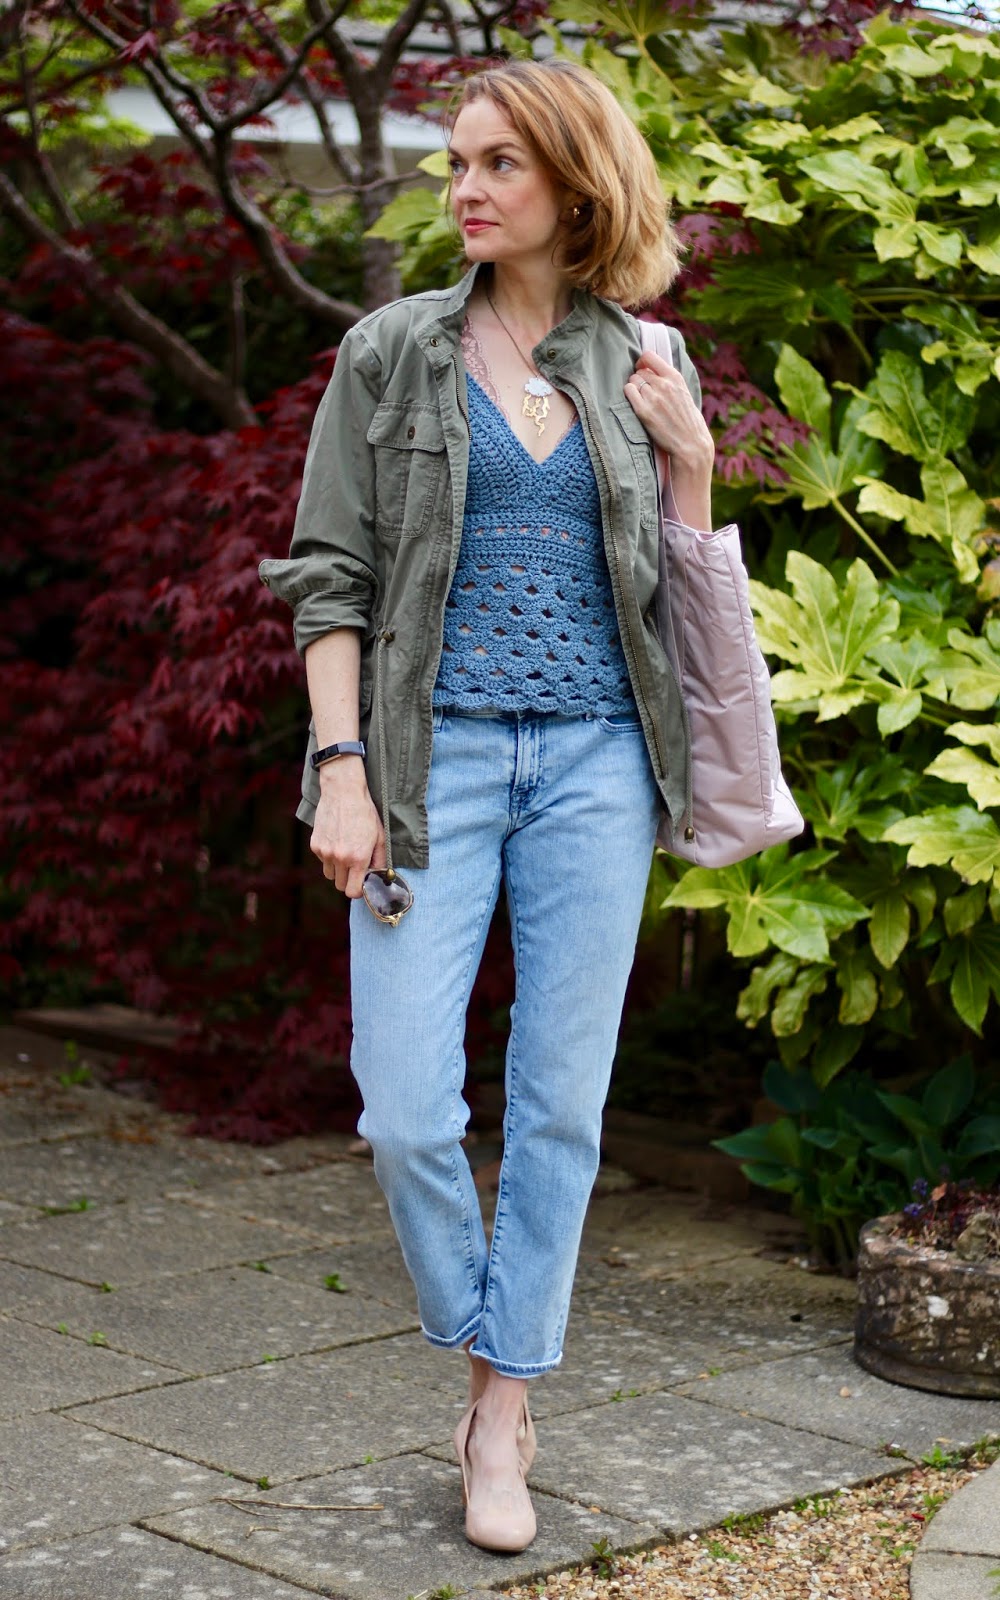 Crochet top Khaki jacket and denim jeans | Spring Style | Fake Fabulous